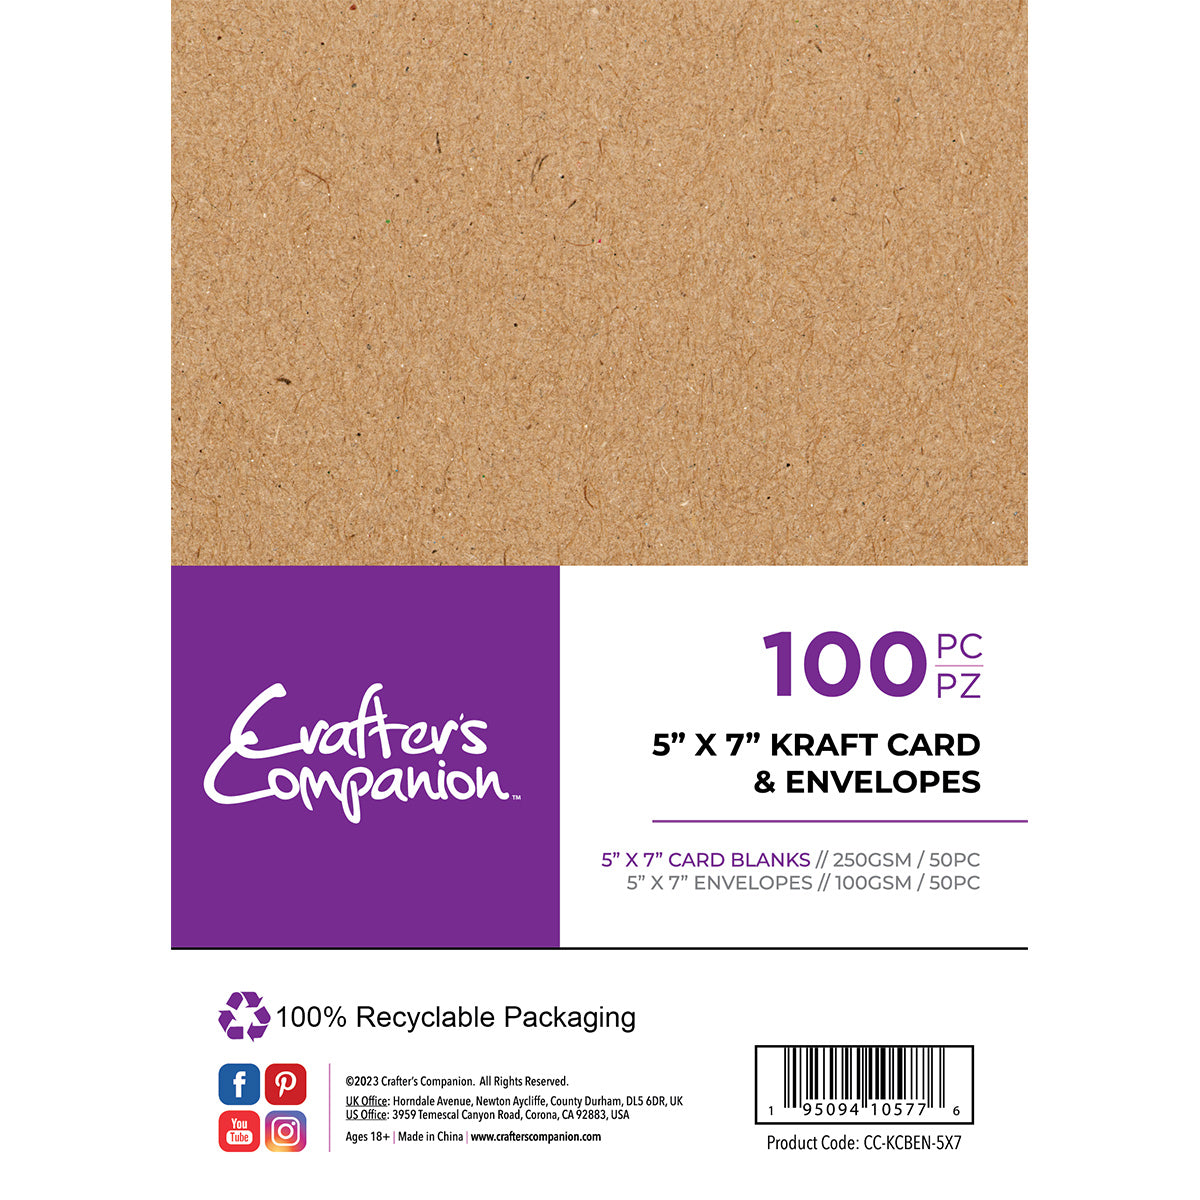 Crafter's Companion - 5" x 7" Cards & Envelopes 100 piece - Kraft